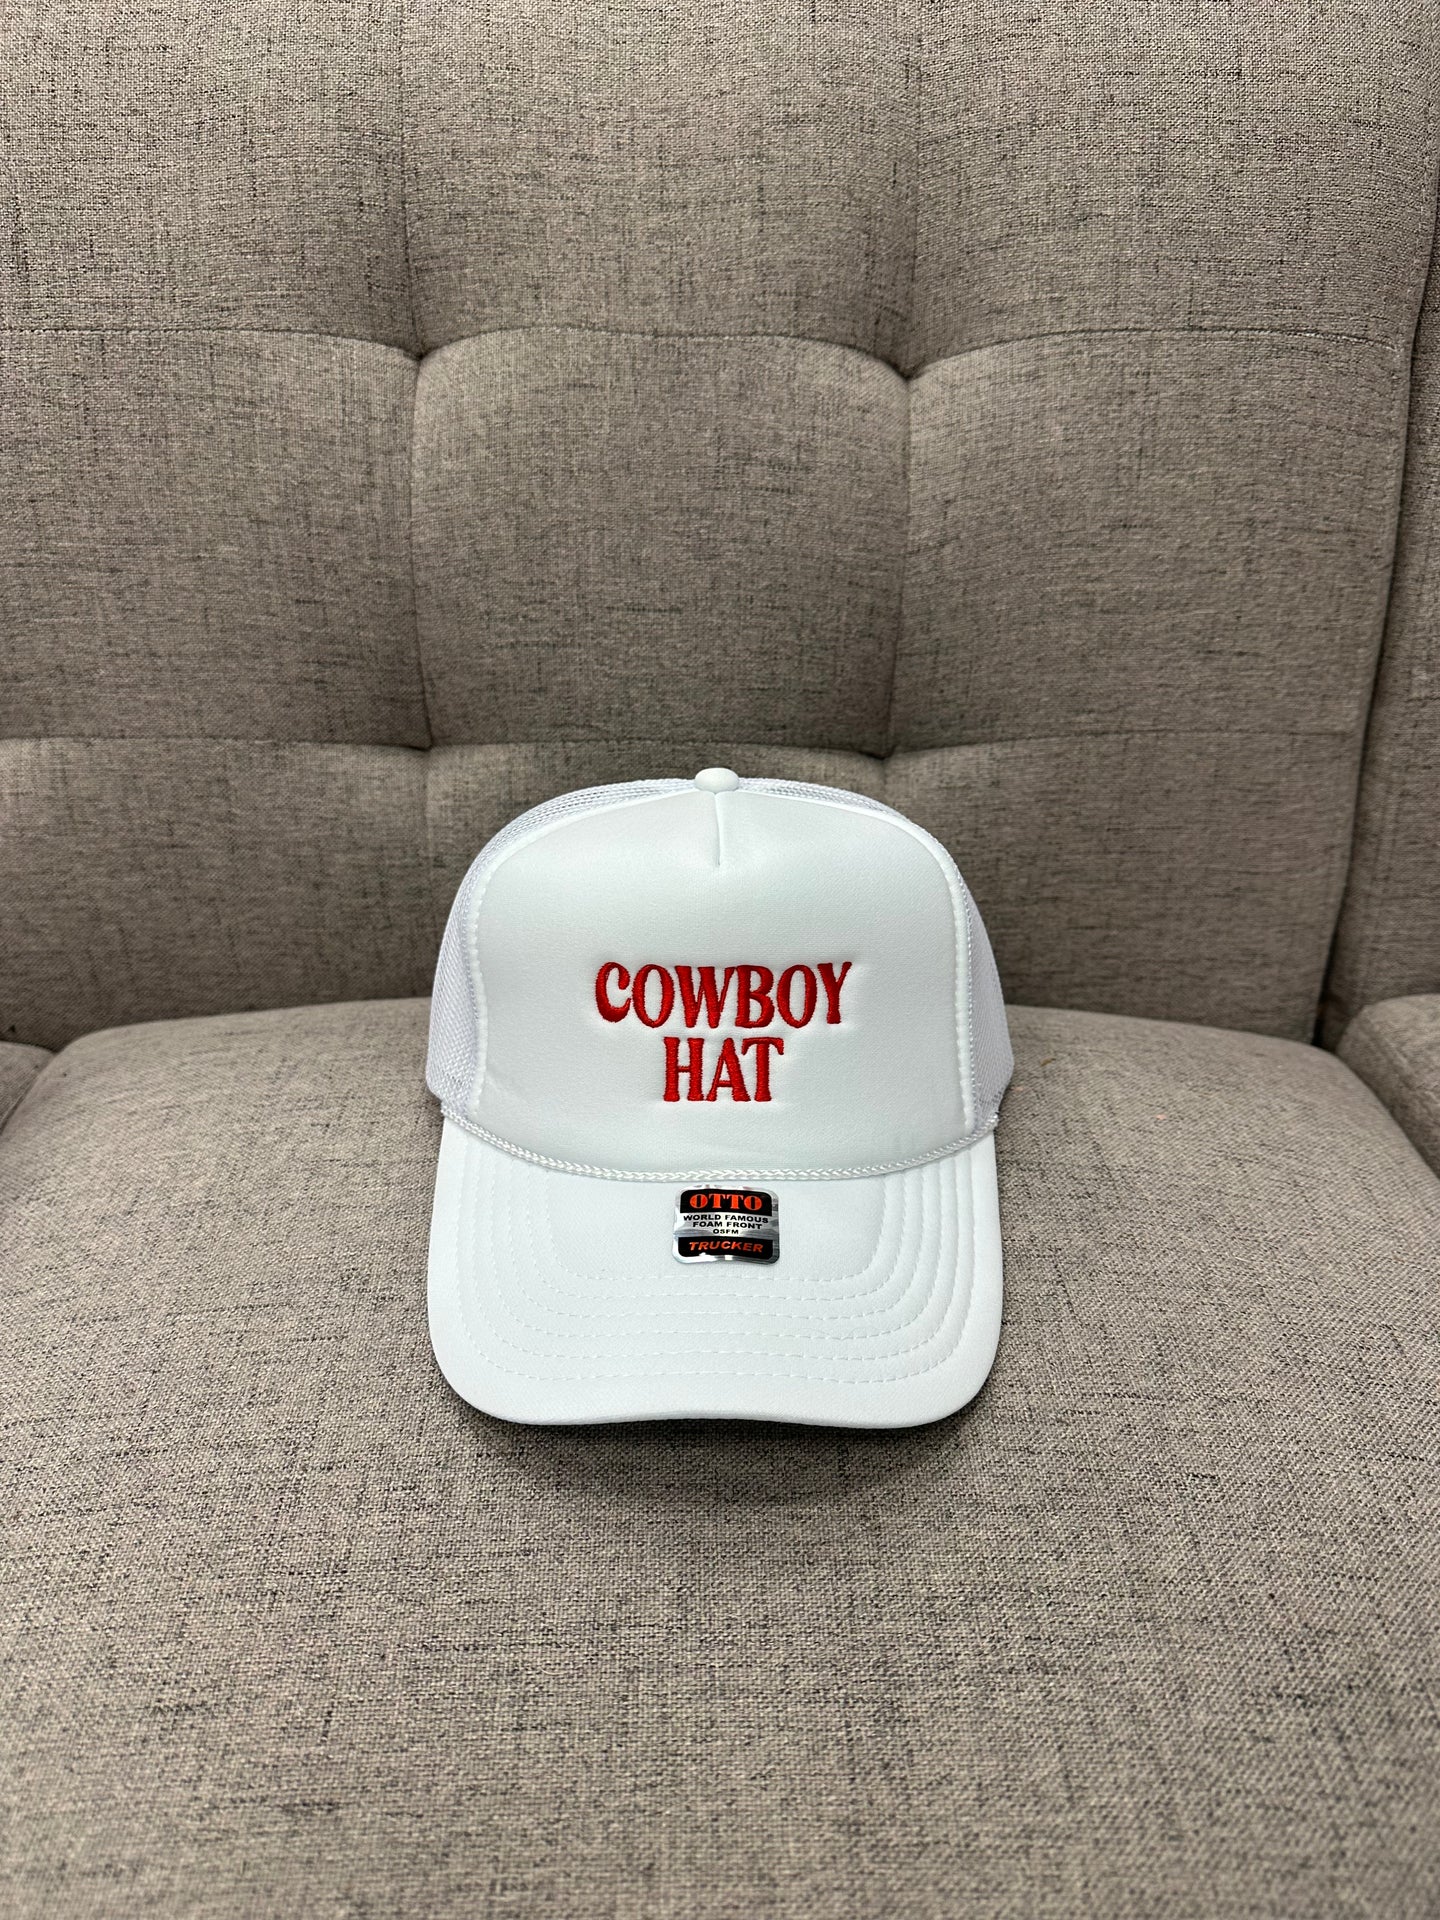 “Cowboy Hat” Red writing Trucker Hat